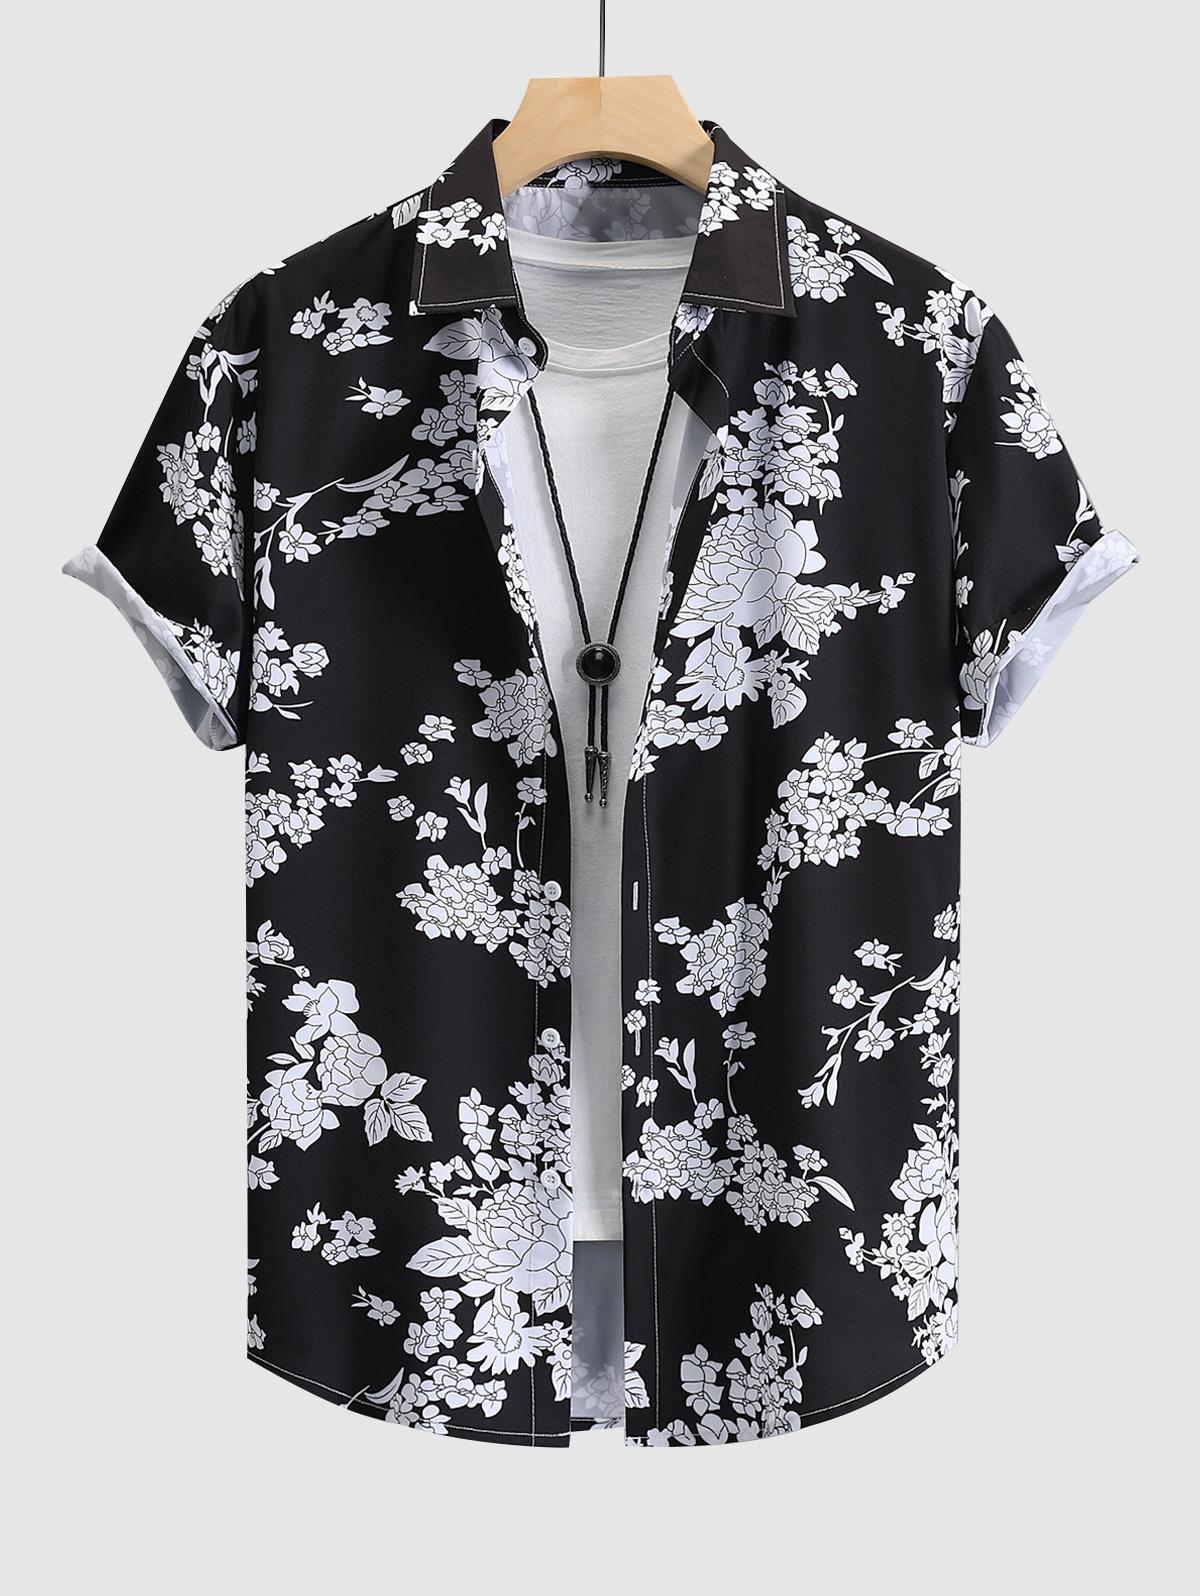 ZAFUL Men's Floral Button Up Short Sleeve Shirt M Black